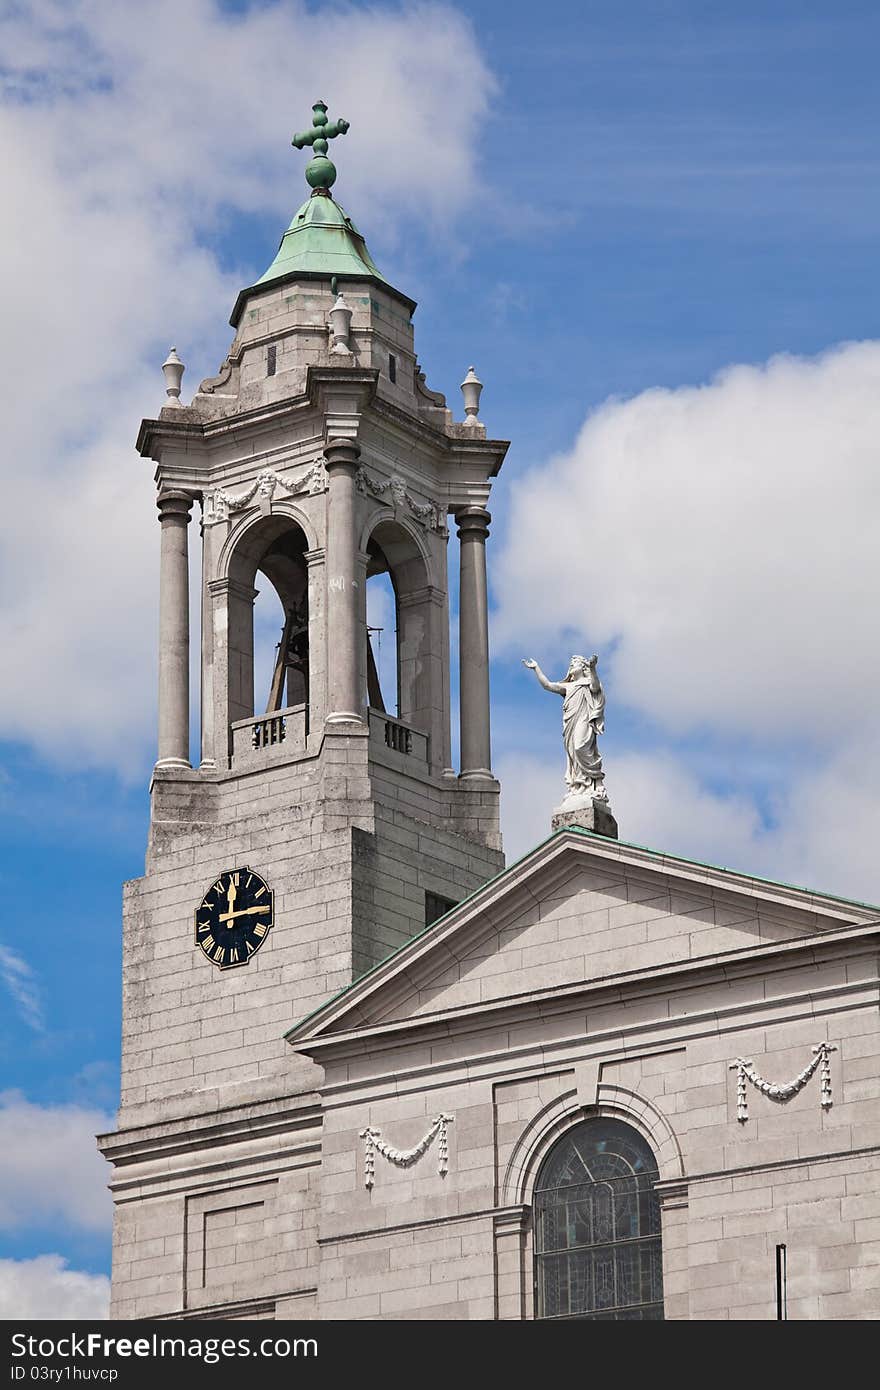 Tower of St. Paul church in Athlone, Ireland.